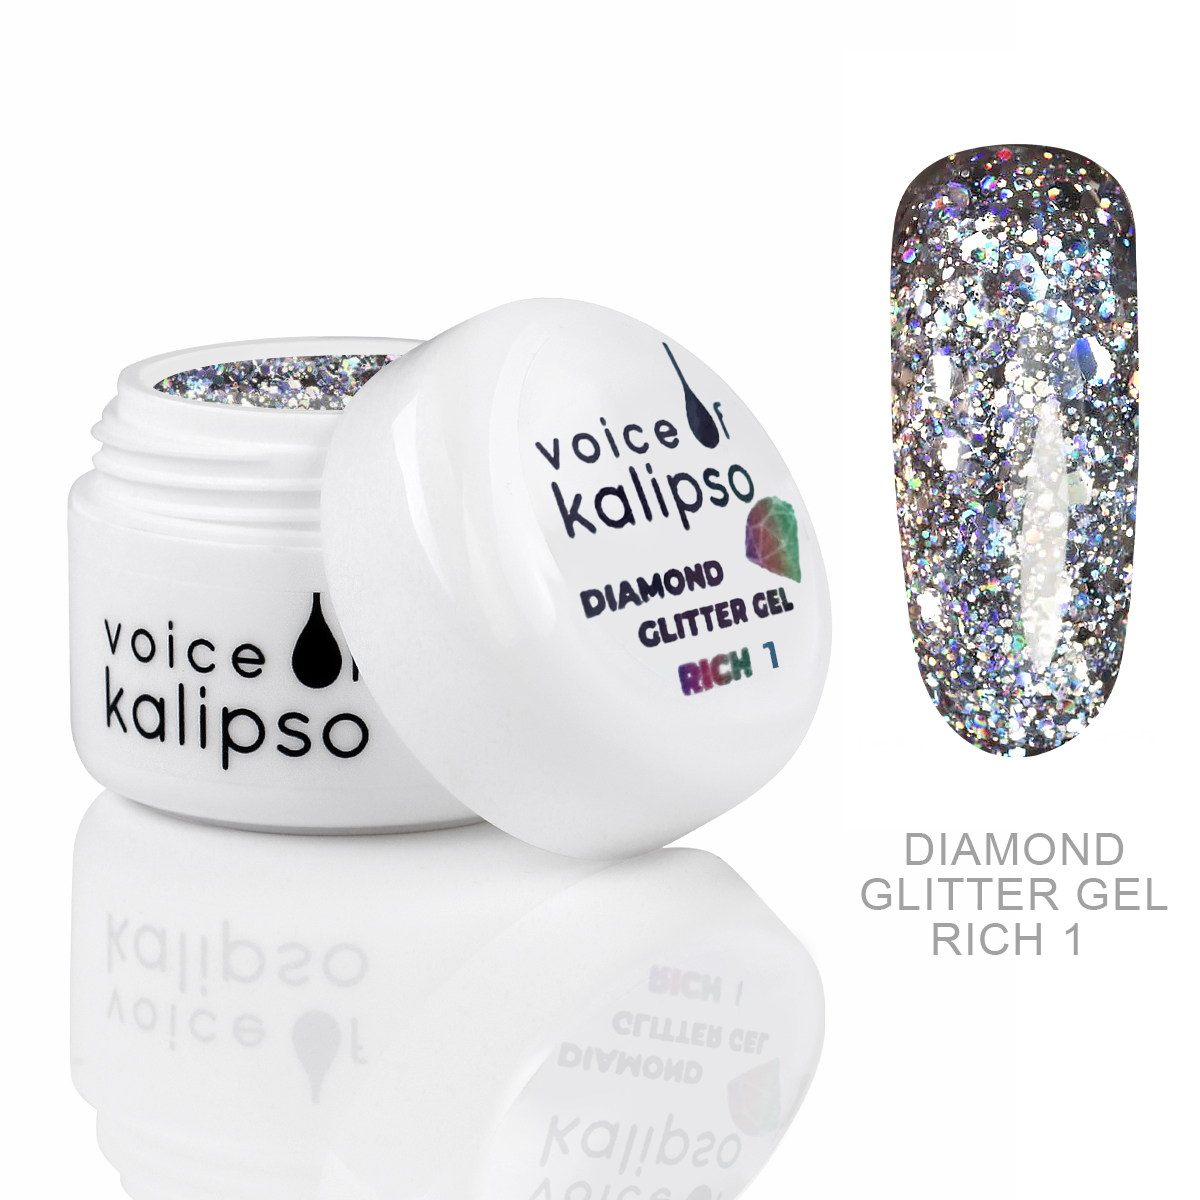 Diamonds voice. Voice of Kalipso краска гелевая Gel Paint. Калипсо Diamond glitter Gel Rich 6. Глиттер гель. Diamond glitter маска.